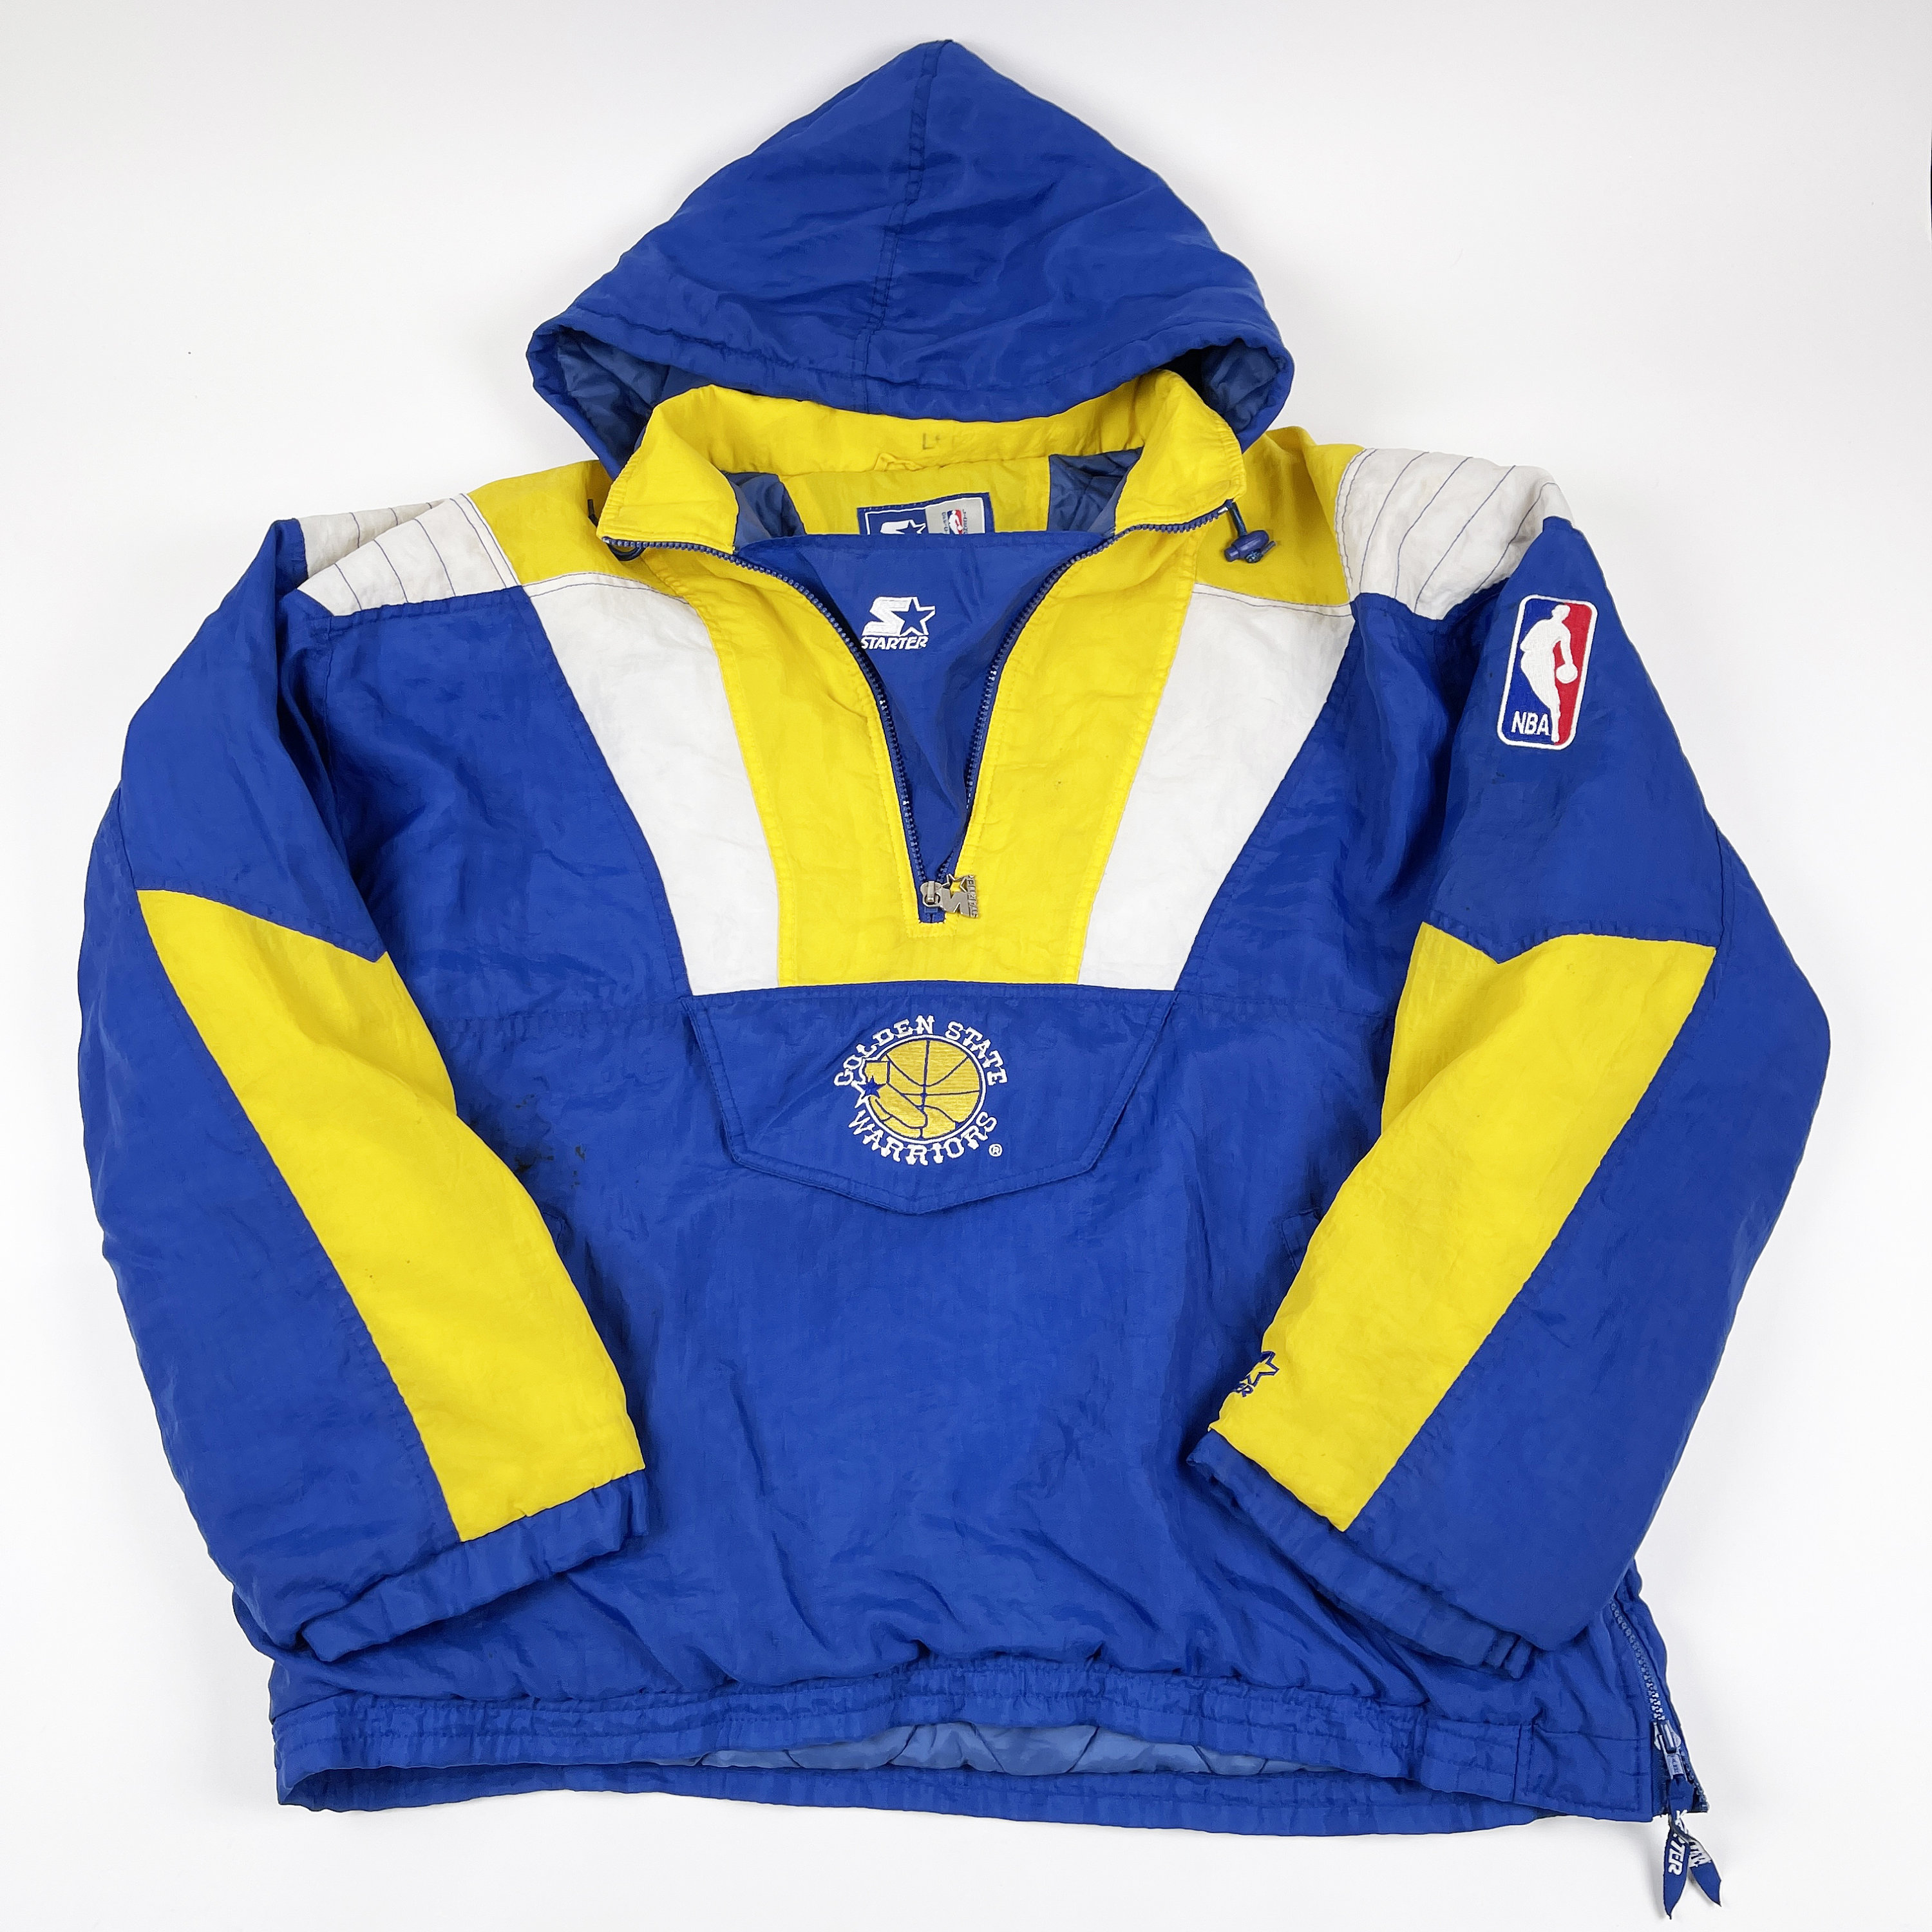 Golden State Warriors Mens Jackets, Mens Pullover Jacket, Warriors Full Zip  Jacket